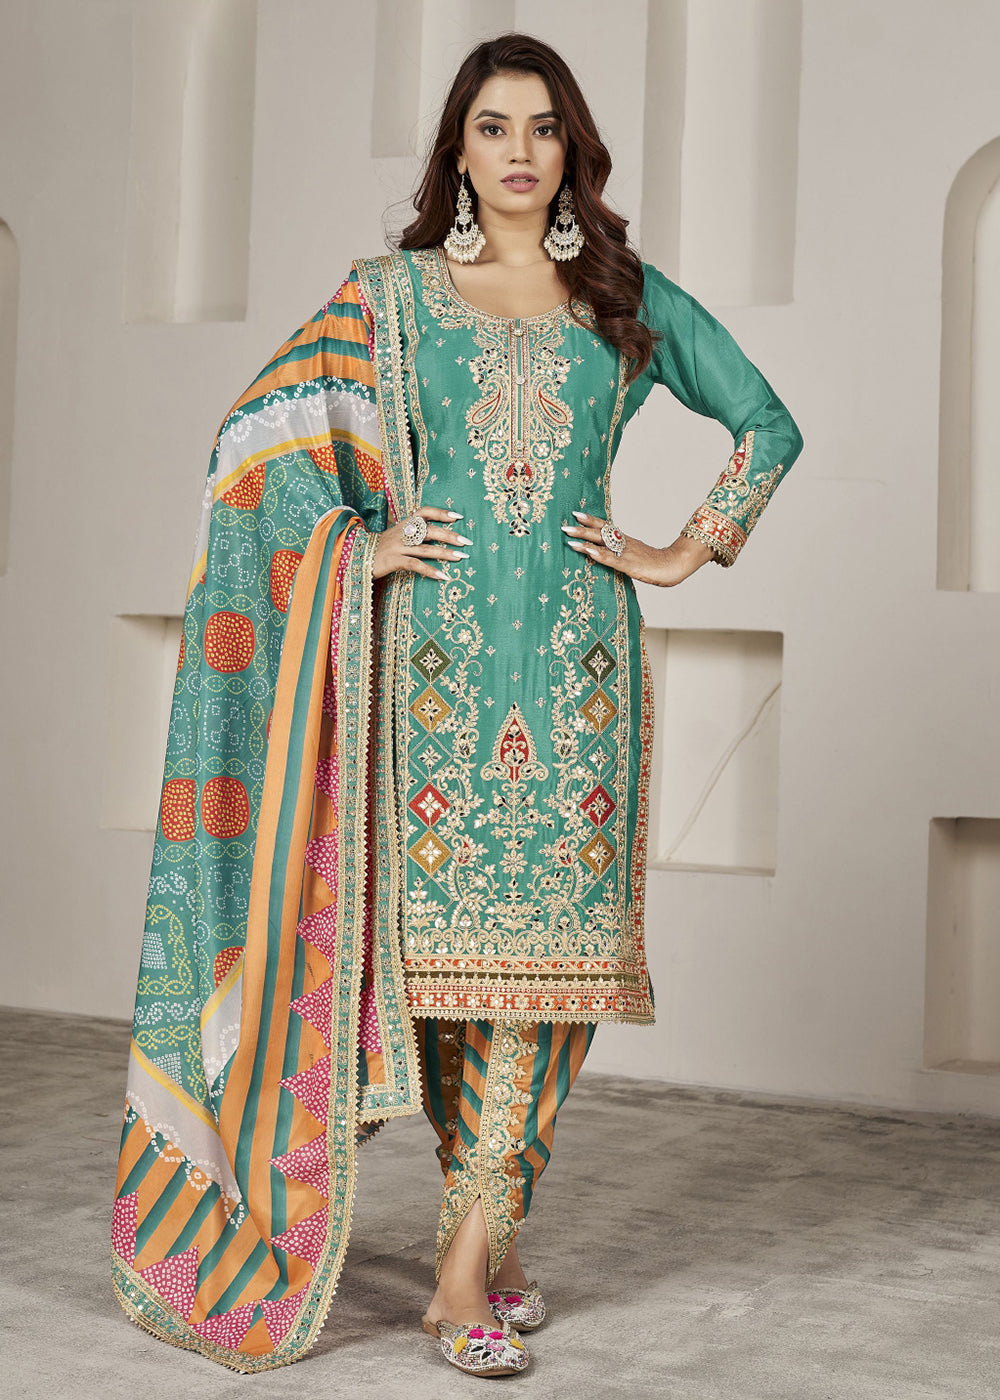 Buy Now Designer Sea Green Punjabi Style Dhoti Style Salwar Suit Online in USA, UK, Canada, Germany, Australia & Worldwide at Empress Clothing. 